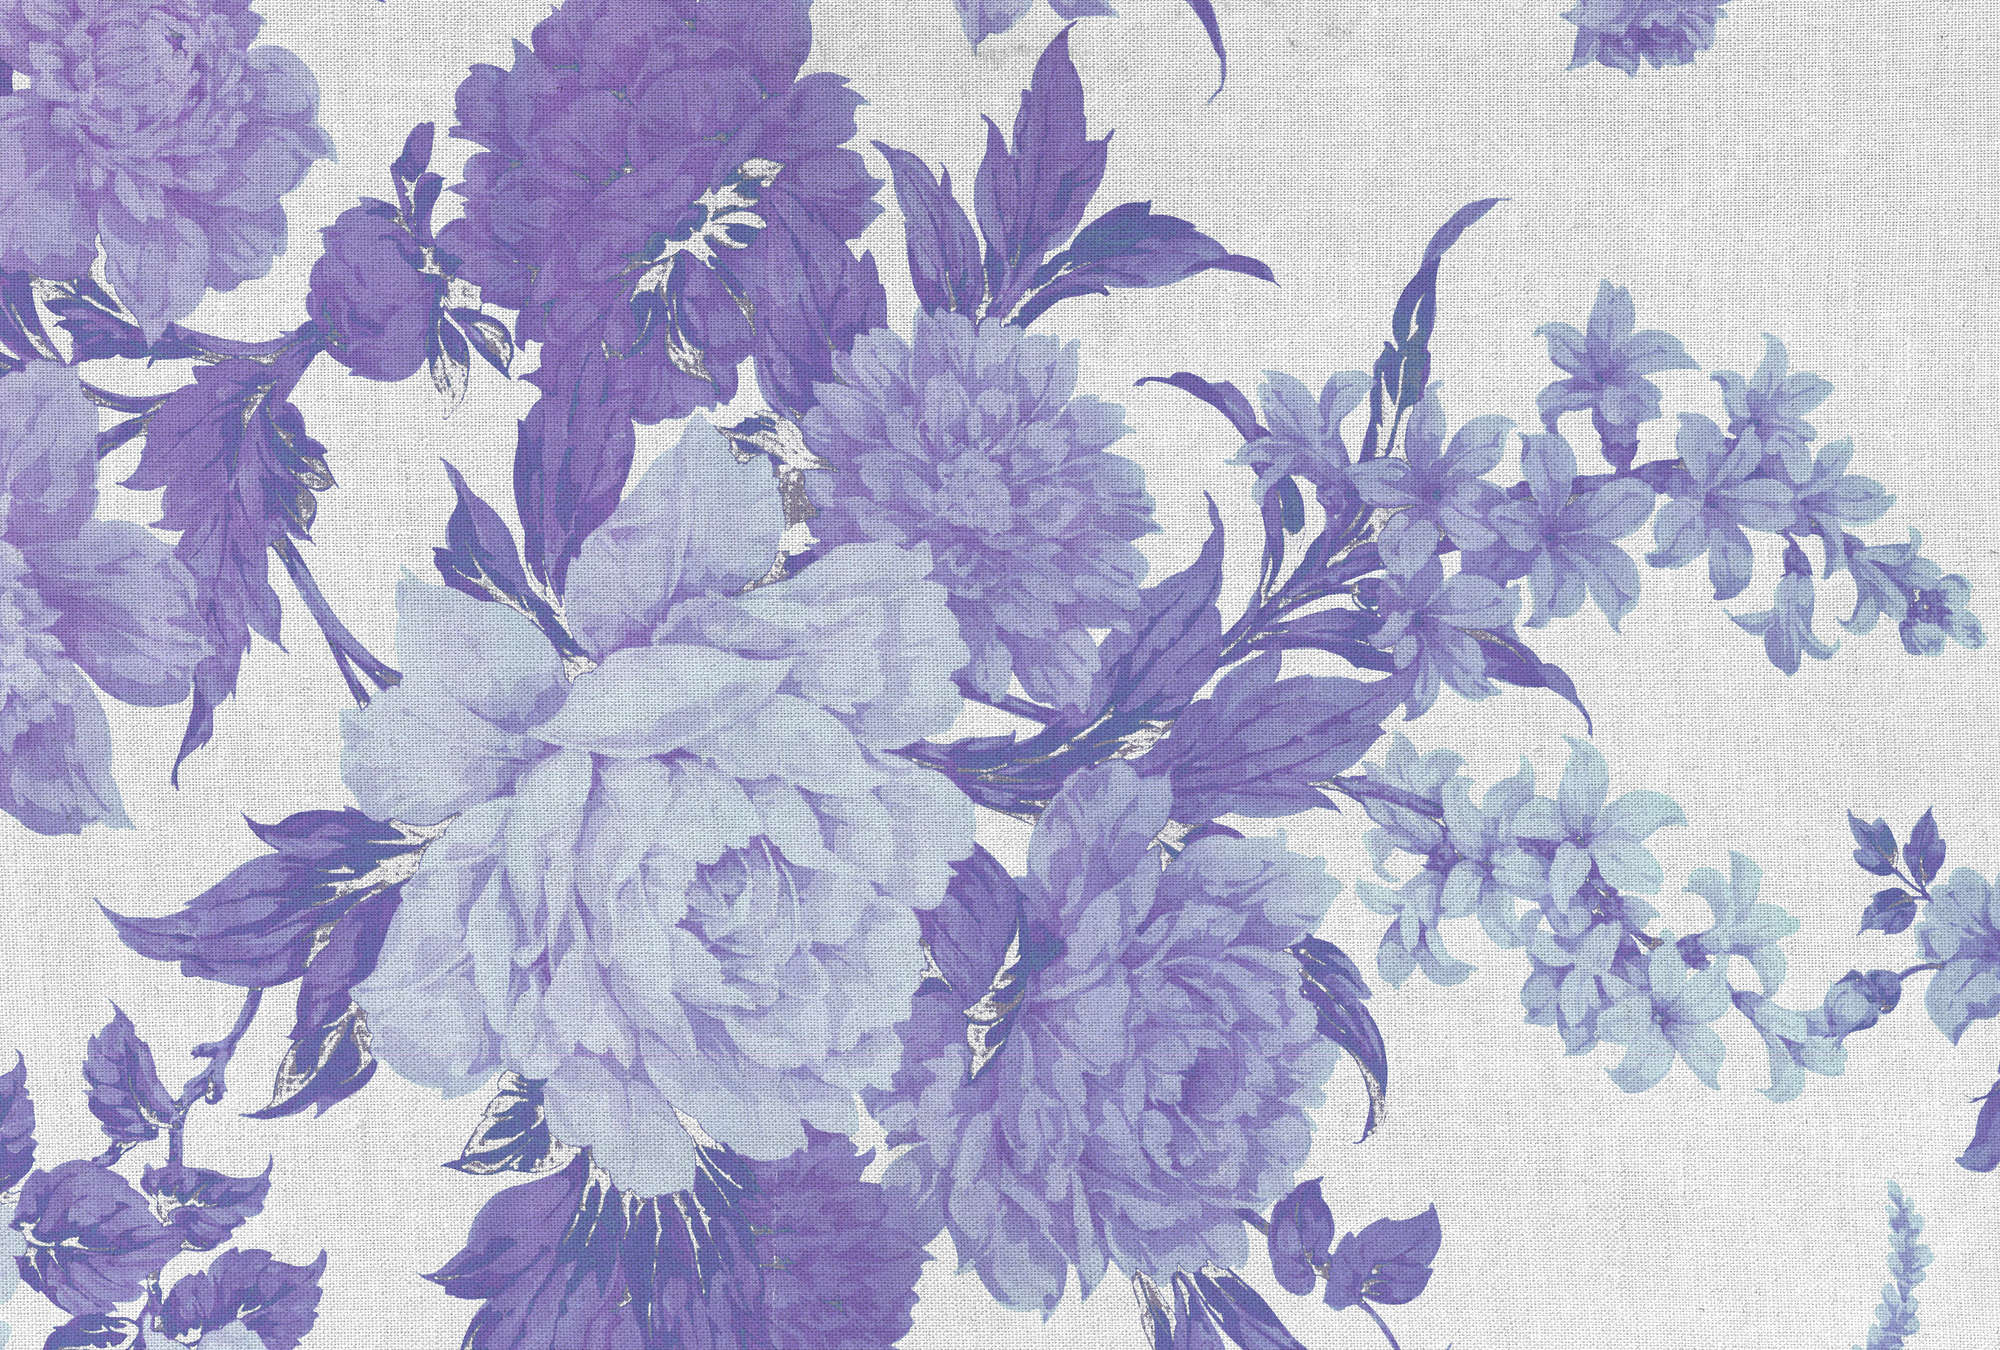             Photo wallpaper roses, floral ornament & textile look - purple, blue, white
        